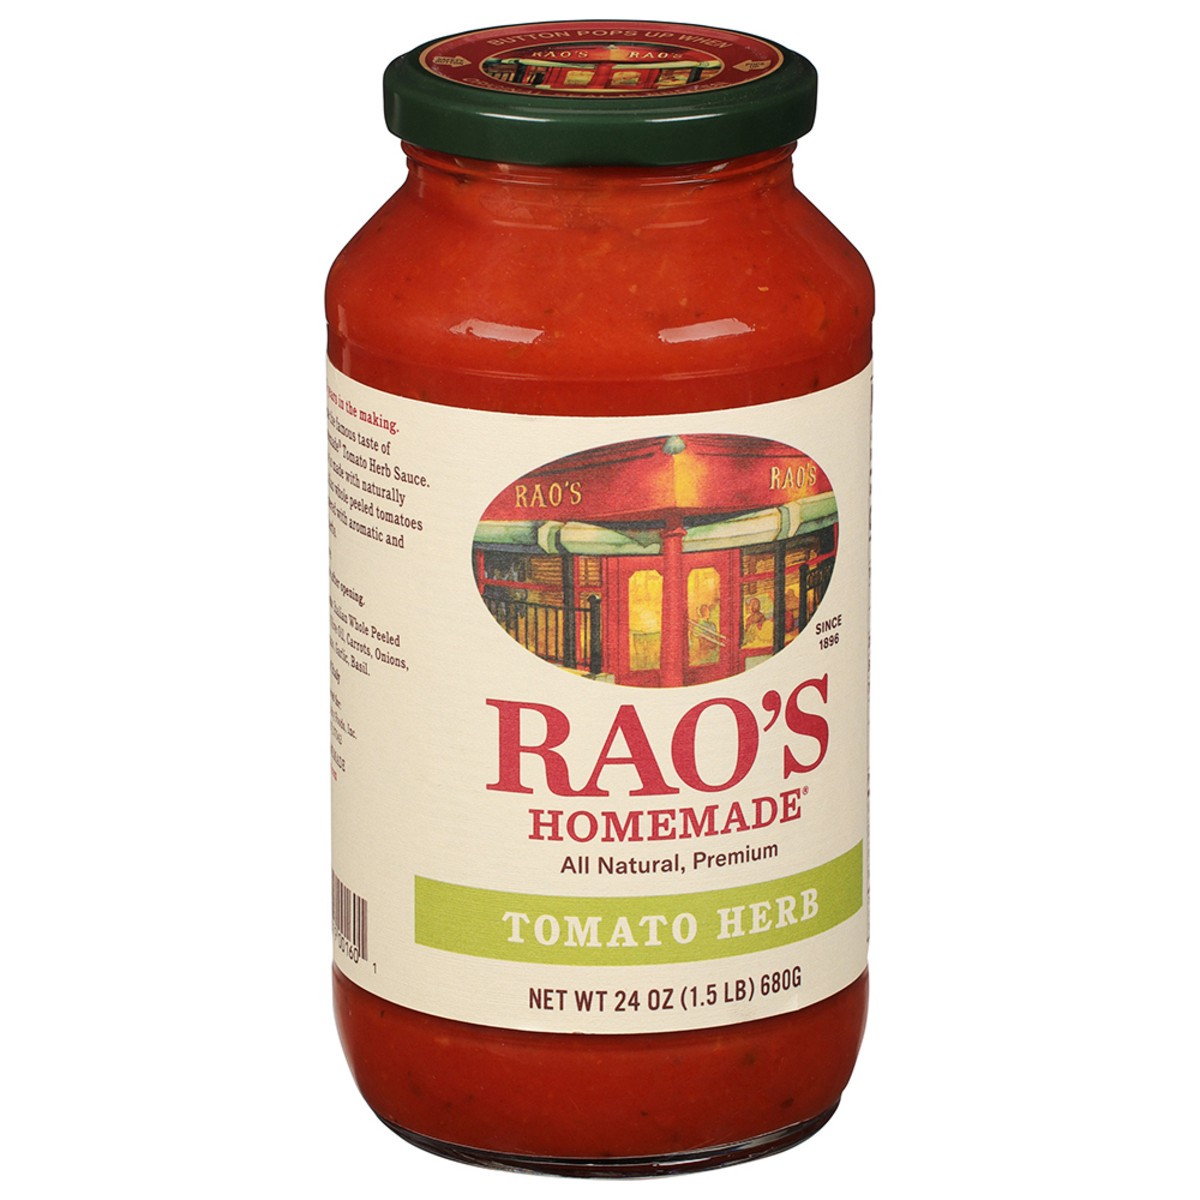 slide 5 of 9, Rao's Homemade Homemade Tomato Herb Sauce 1 24 oz, 24 oz